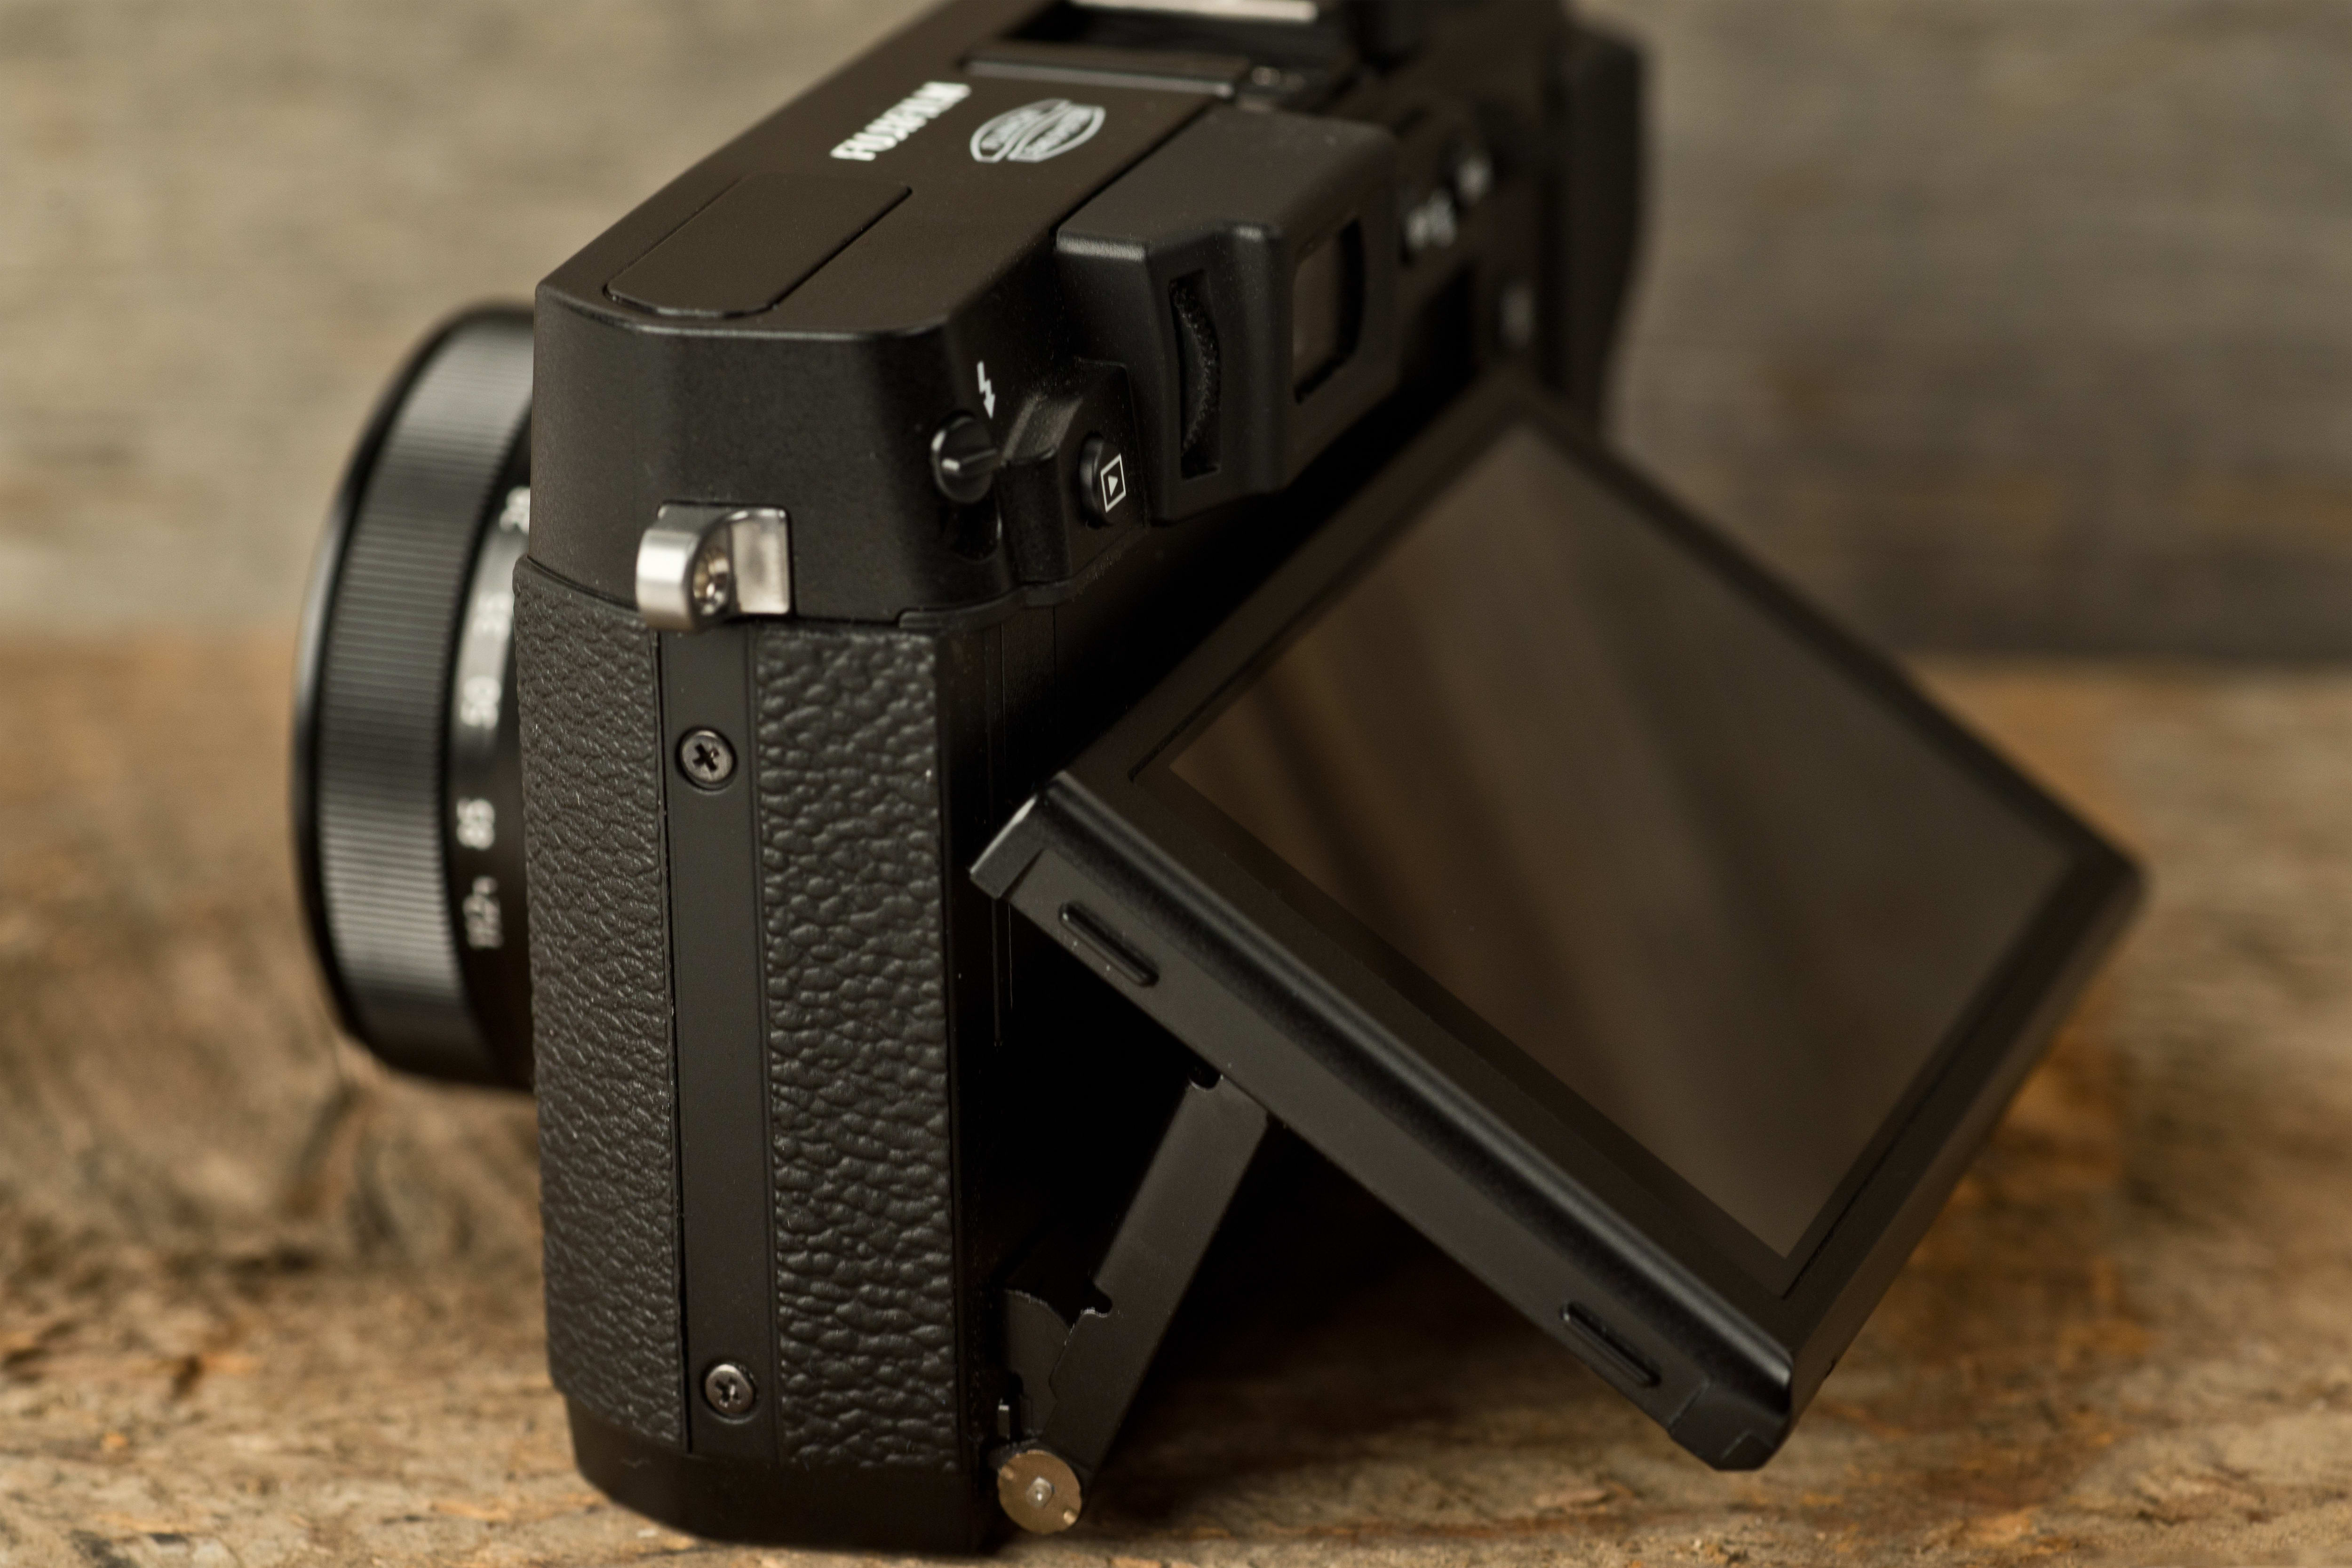 digital camera with viewfinder